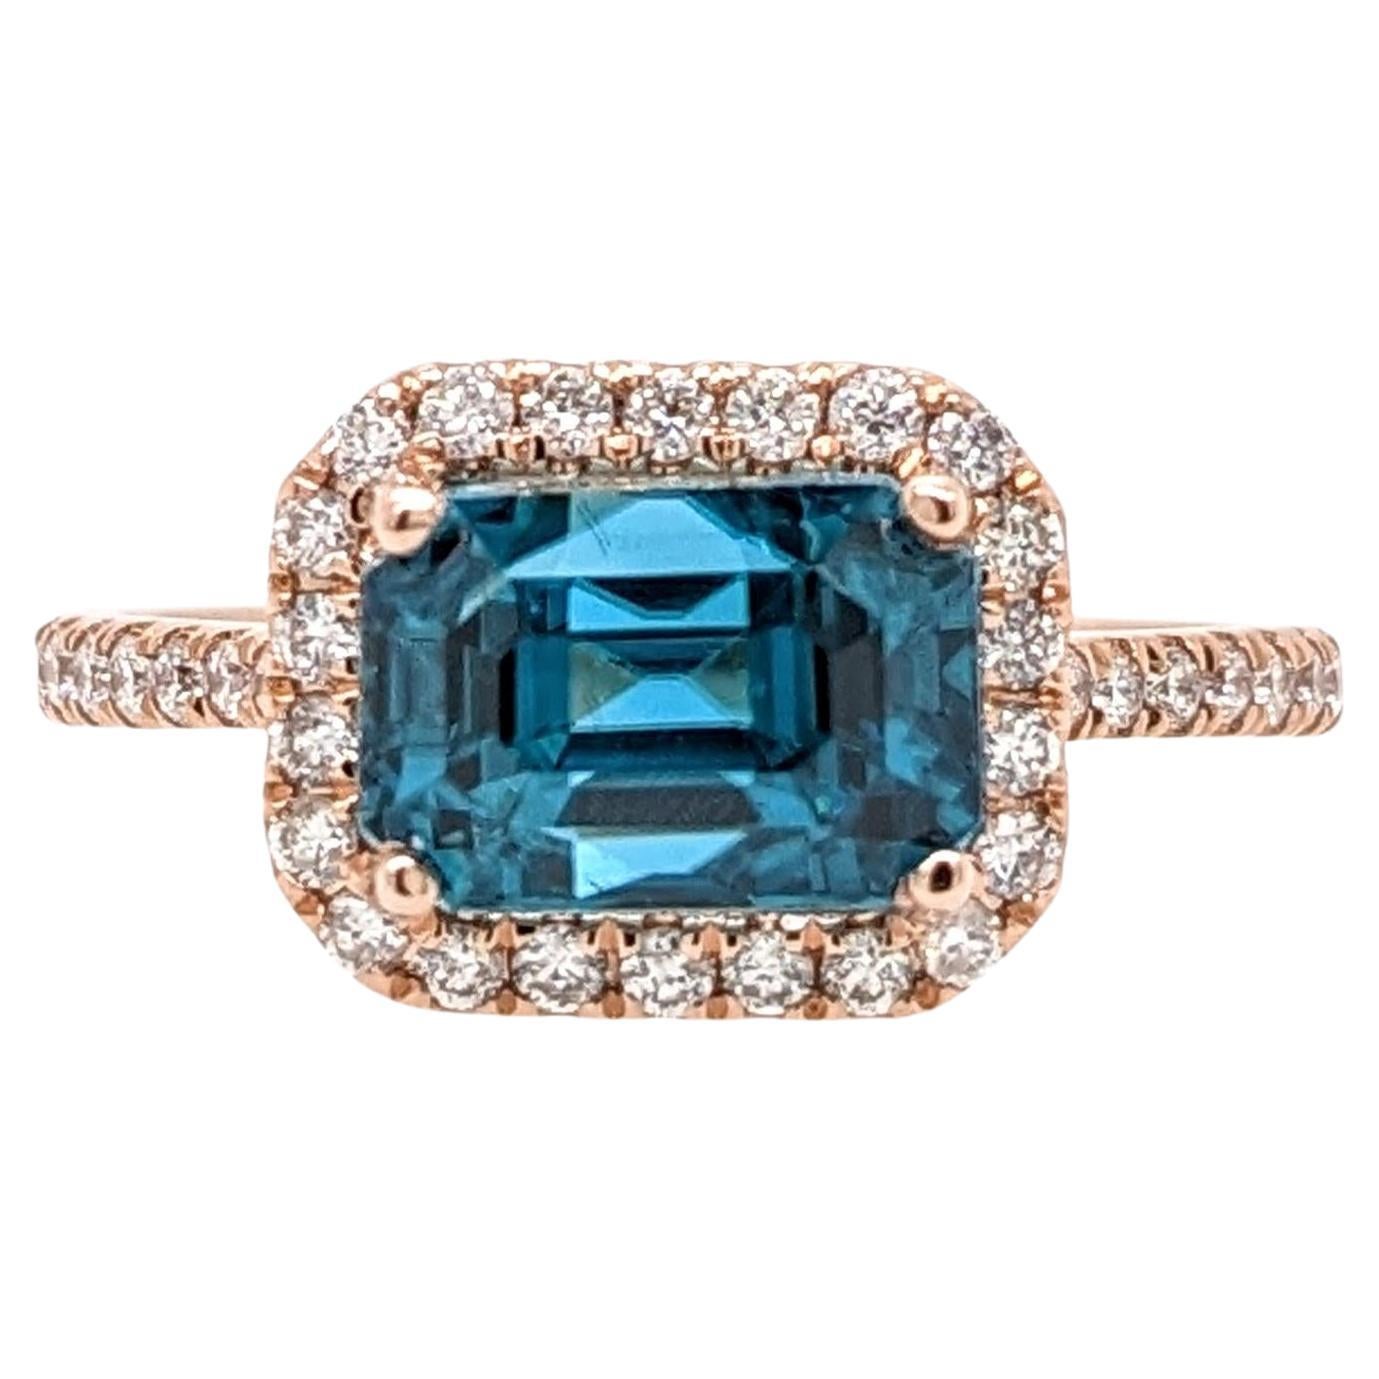 Bague Est-Ouest avec zircon bleu 4,5 carats et diamants naturels en or massif 14 carats EM 8 x 6 mm